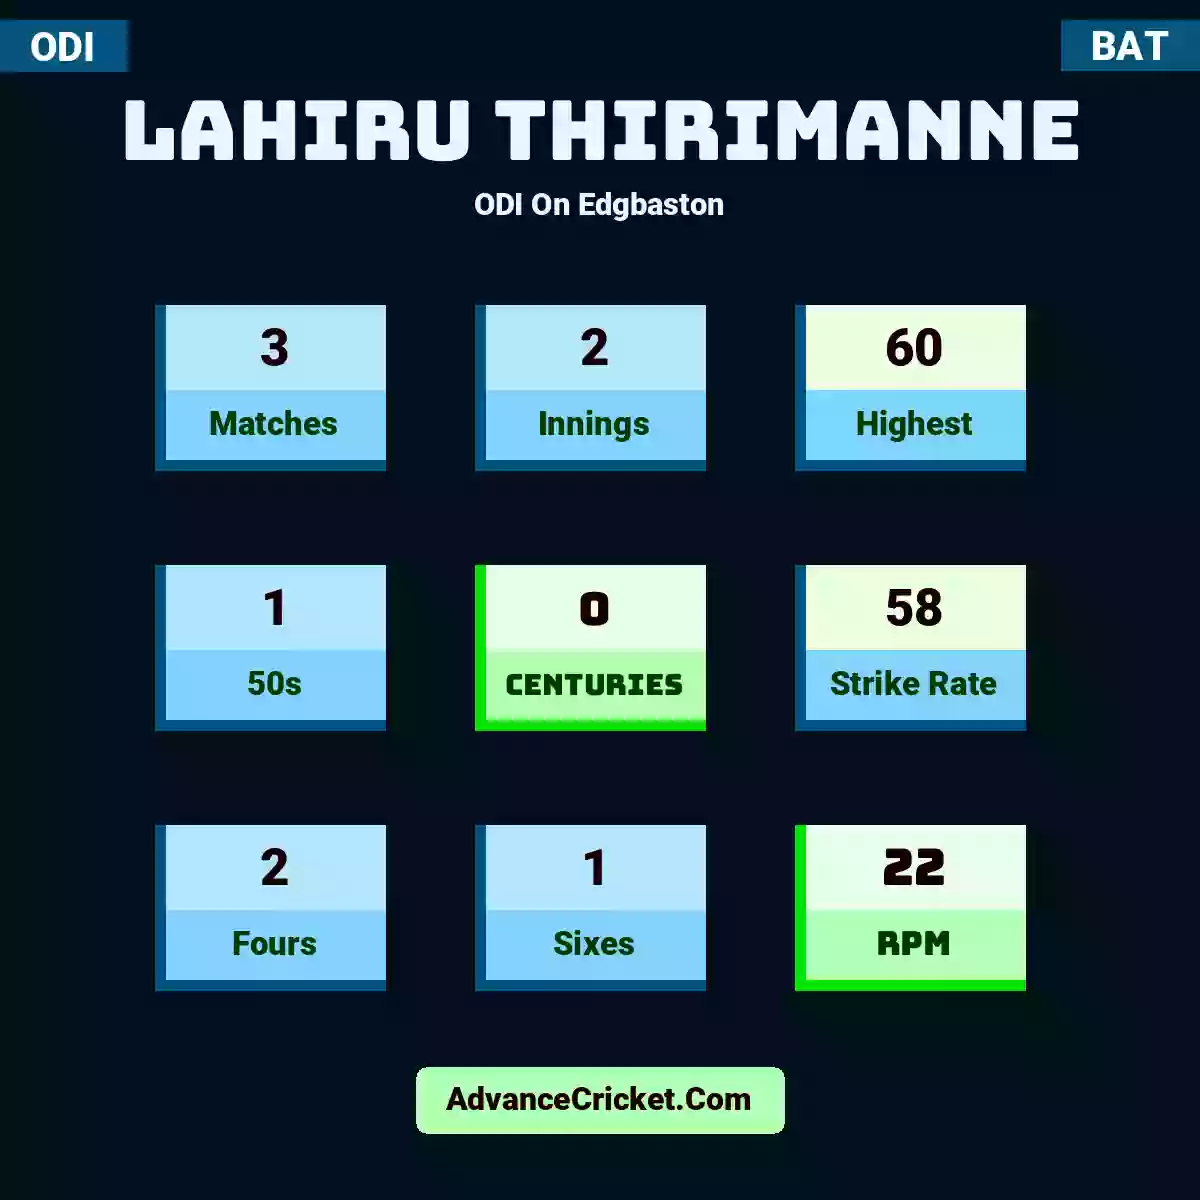 Lahiru Thirimanne ODI  On Edgbaston, Lahiru Thirimanne played 3 matches, scored 60 runs as highest, 1 half-centuries, and 0 centuries, with a strike rate of 58. L.Thirimanne hit 2 fours and 1 sixes, with an RPM of 22.